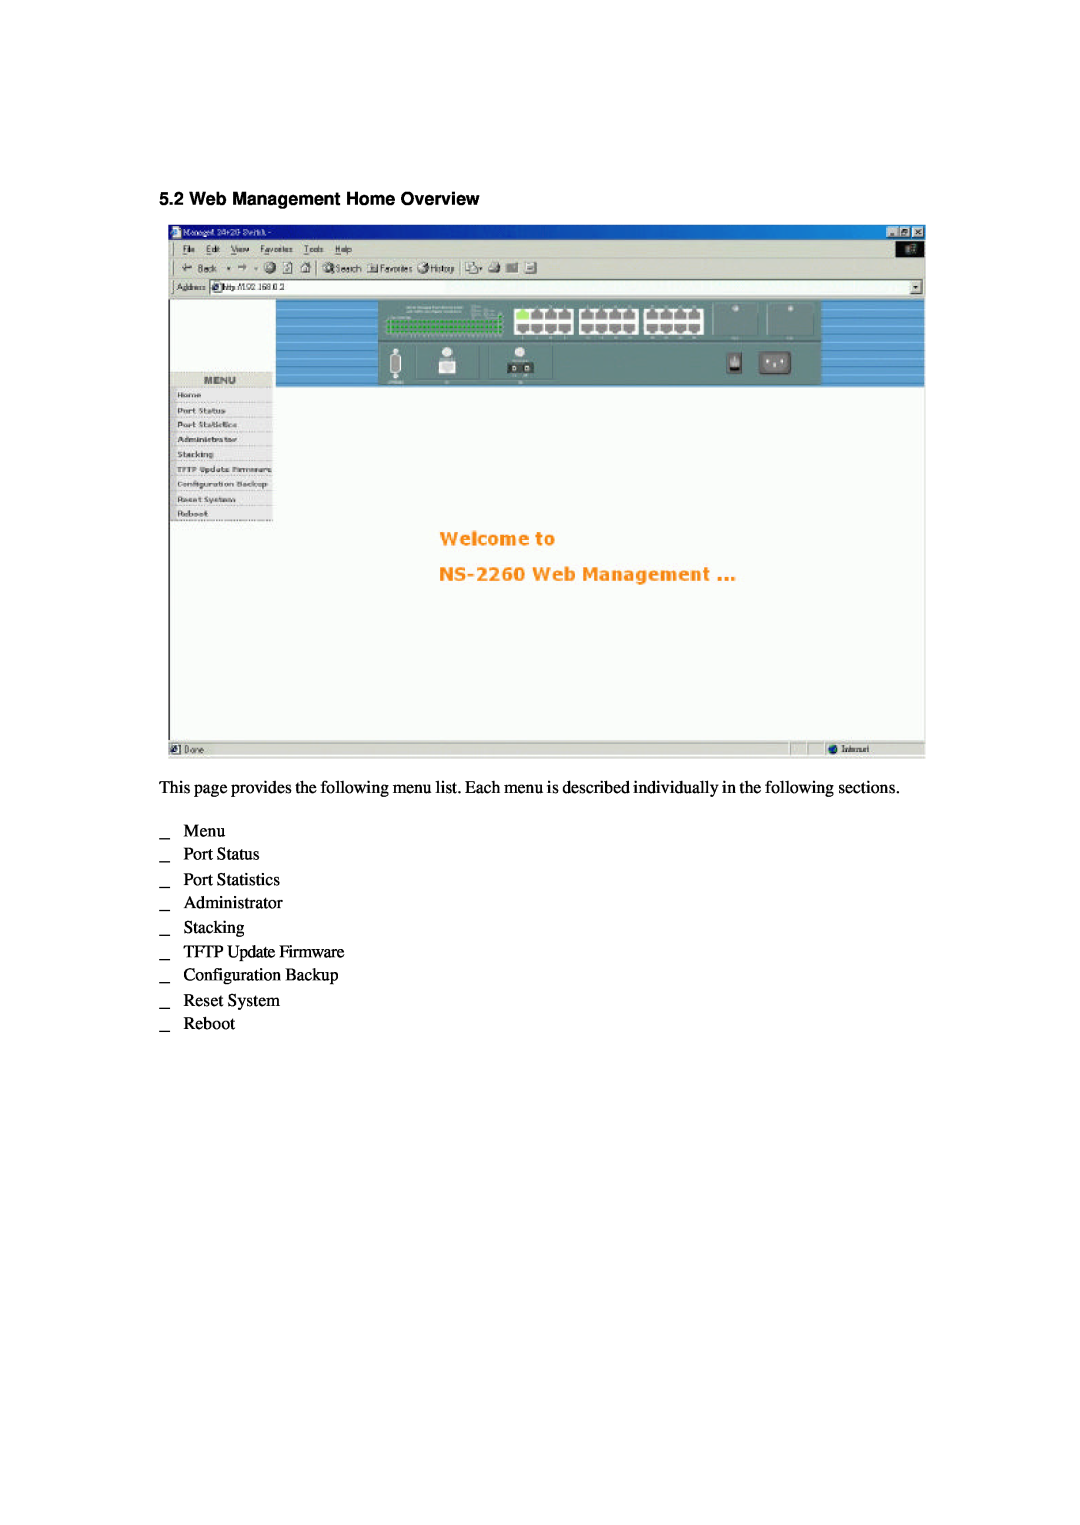 Xerox NS-2260 operation manual Web Management Home Overview, _ Menu _ Port Status _ Port Statistics 